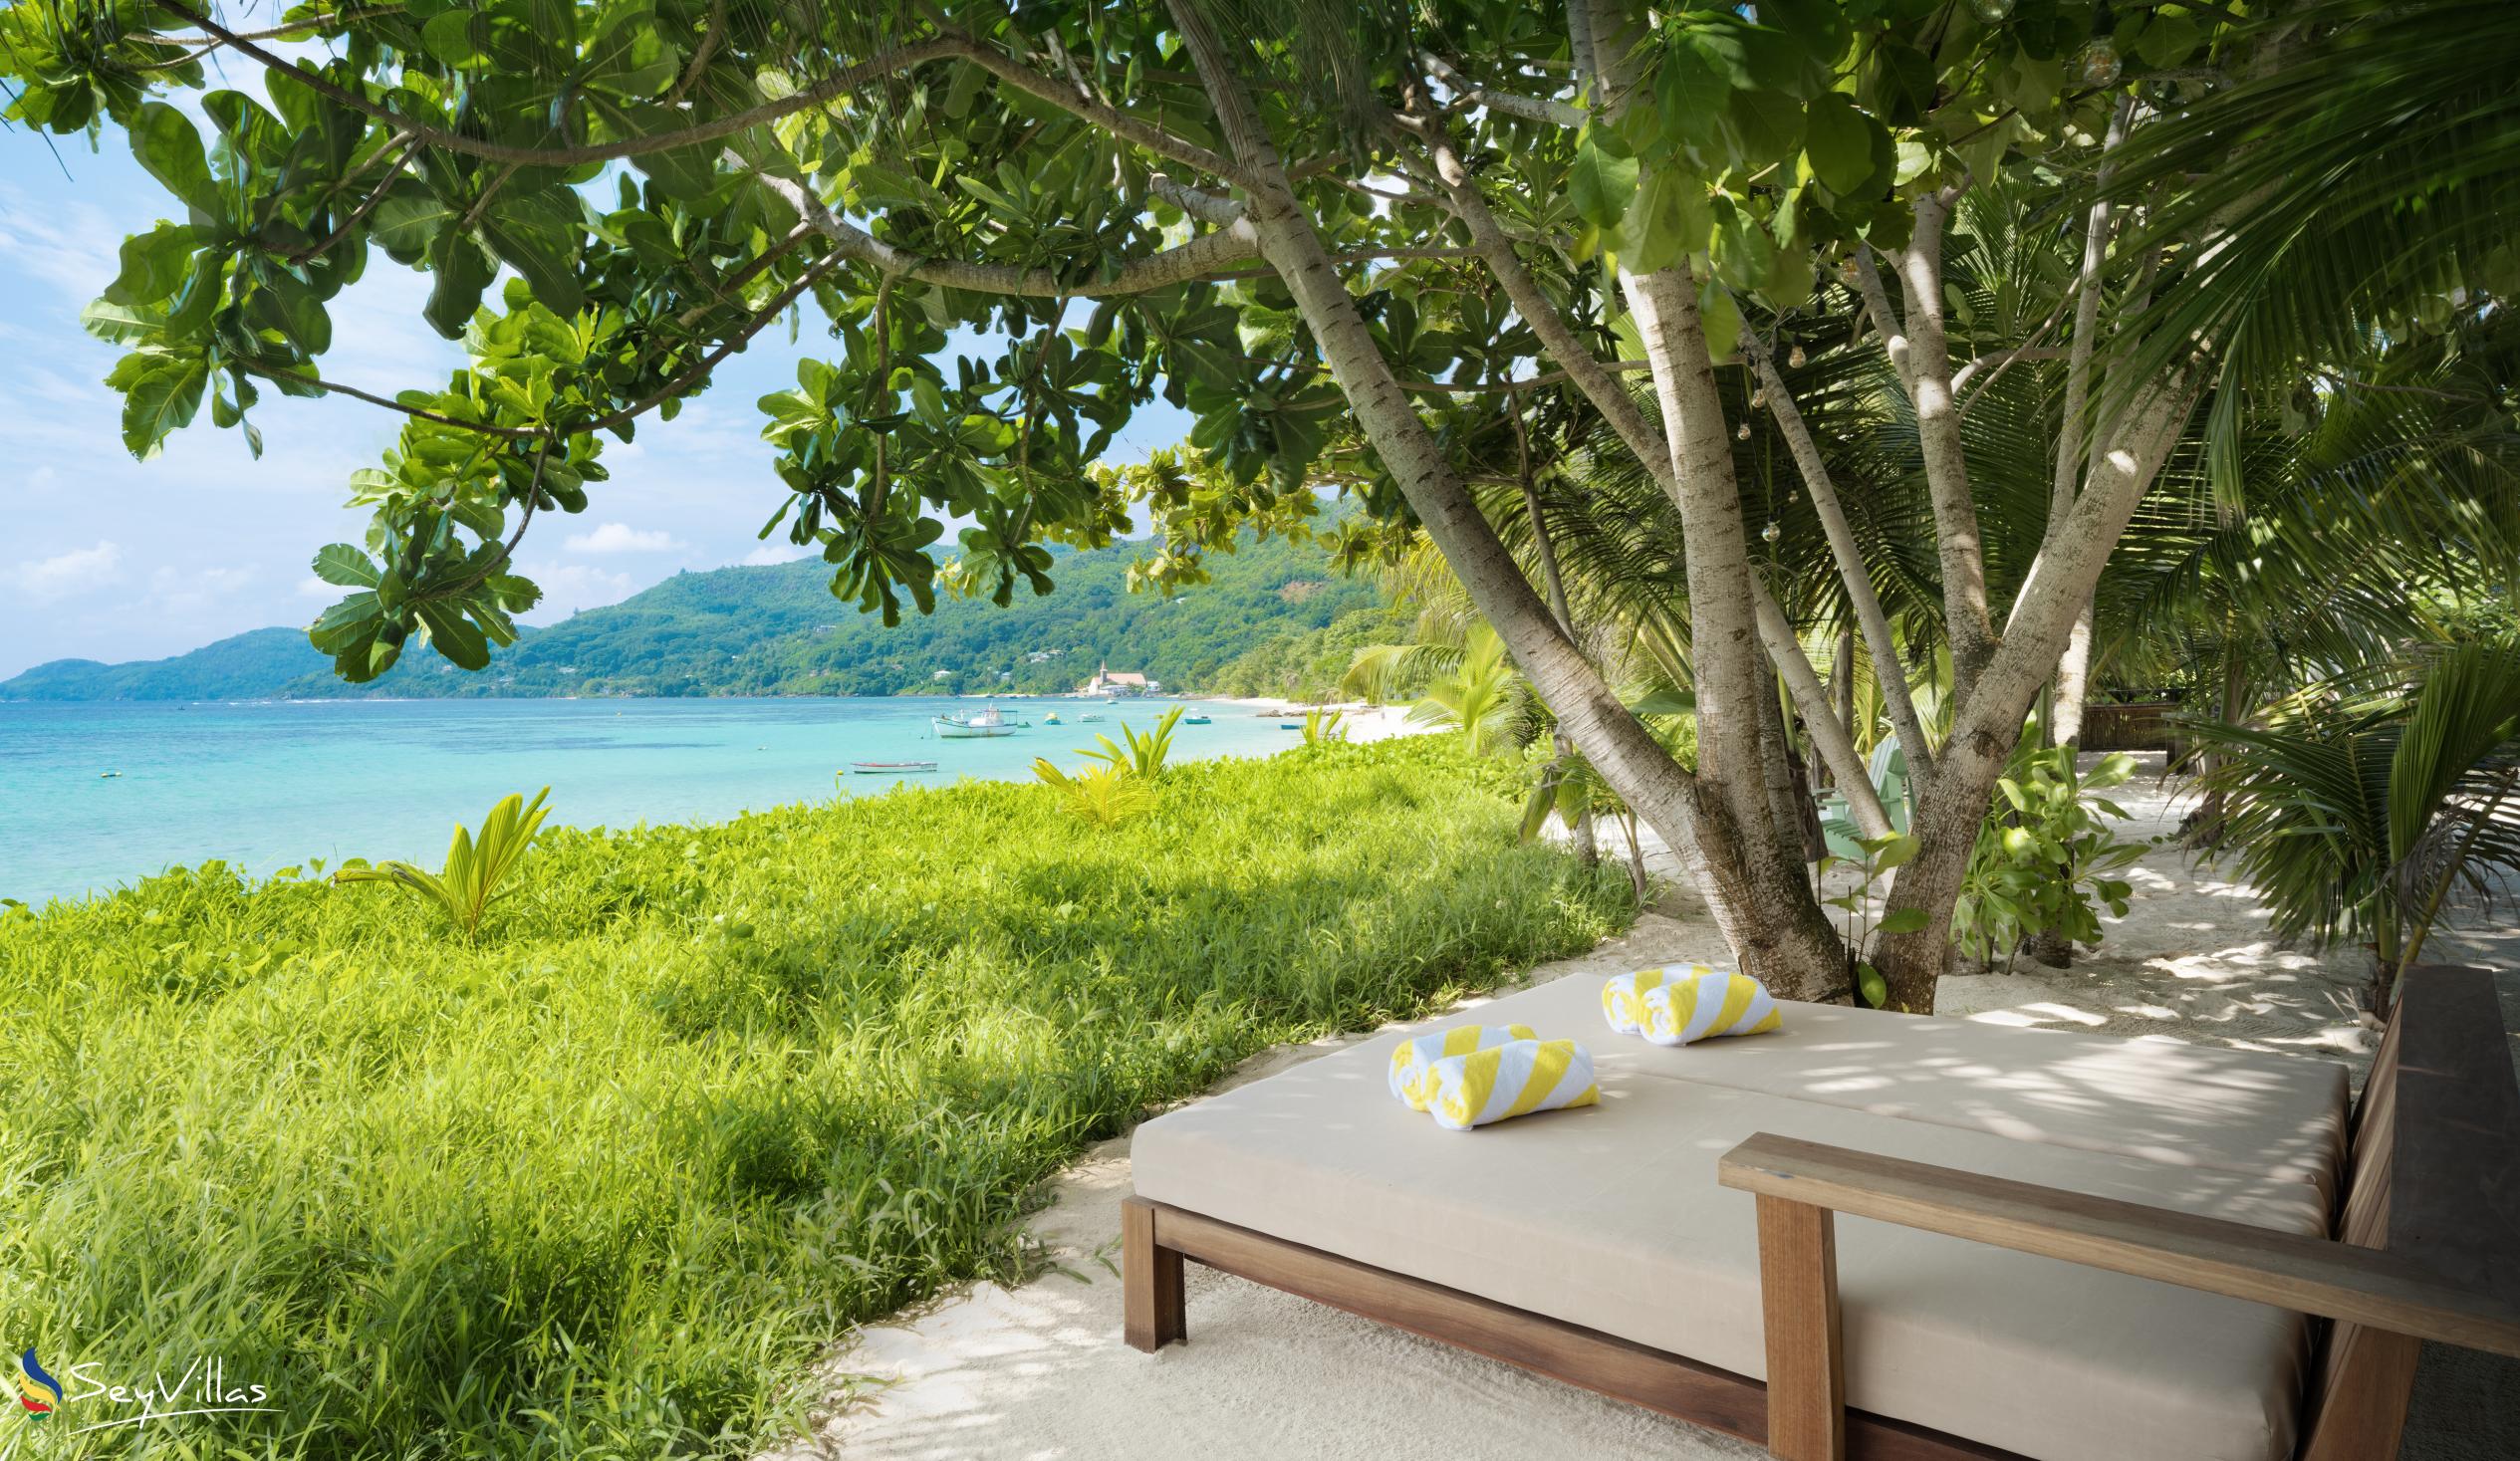 Foto 29: laila Resort - Posizione - Mahé (Seychelles)